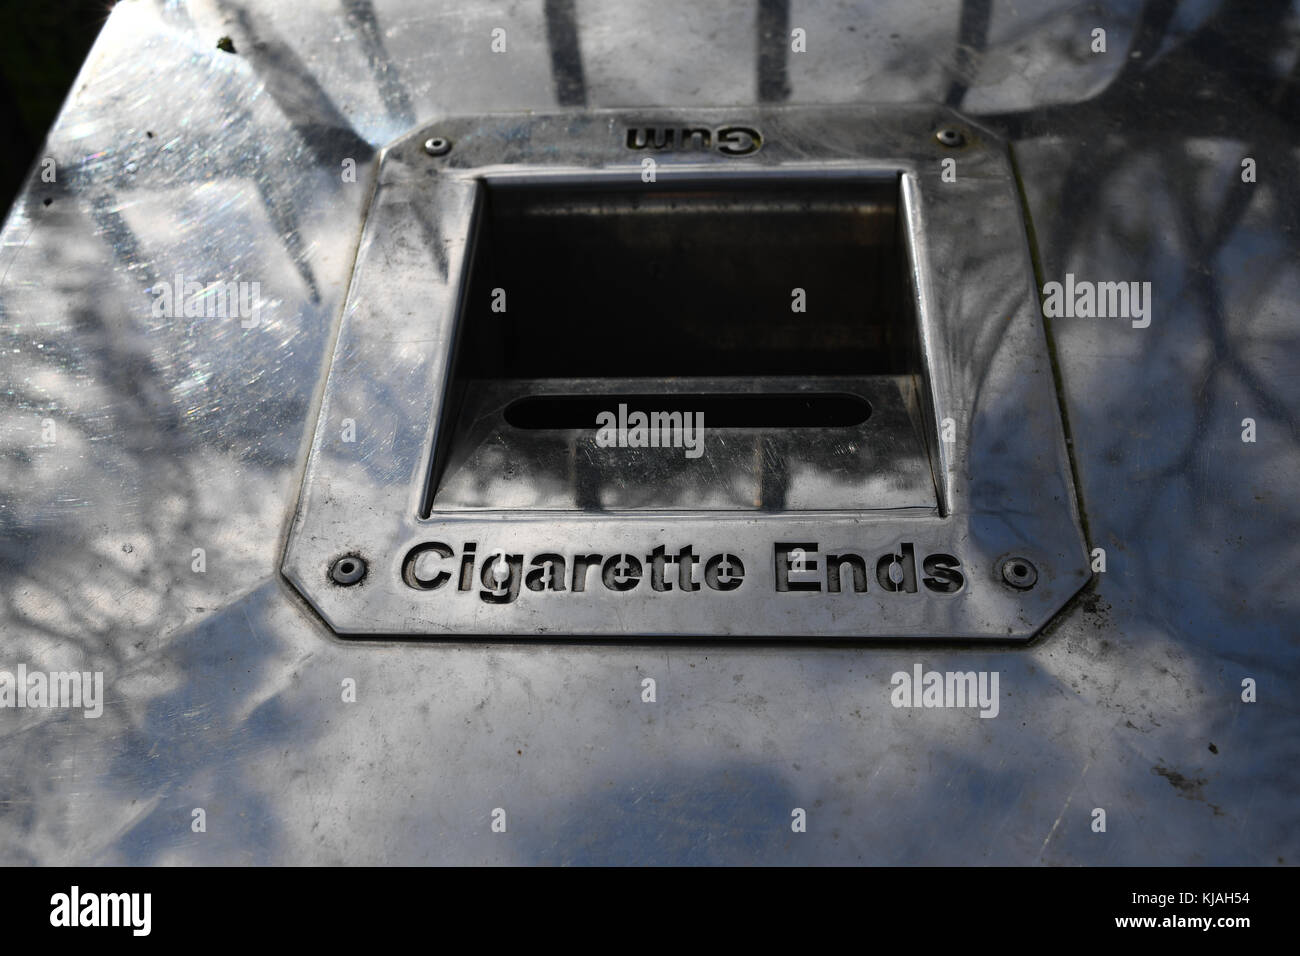 A waste bin with cigarette ends and gum tray.cigarette bin Stock Photo